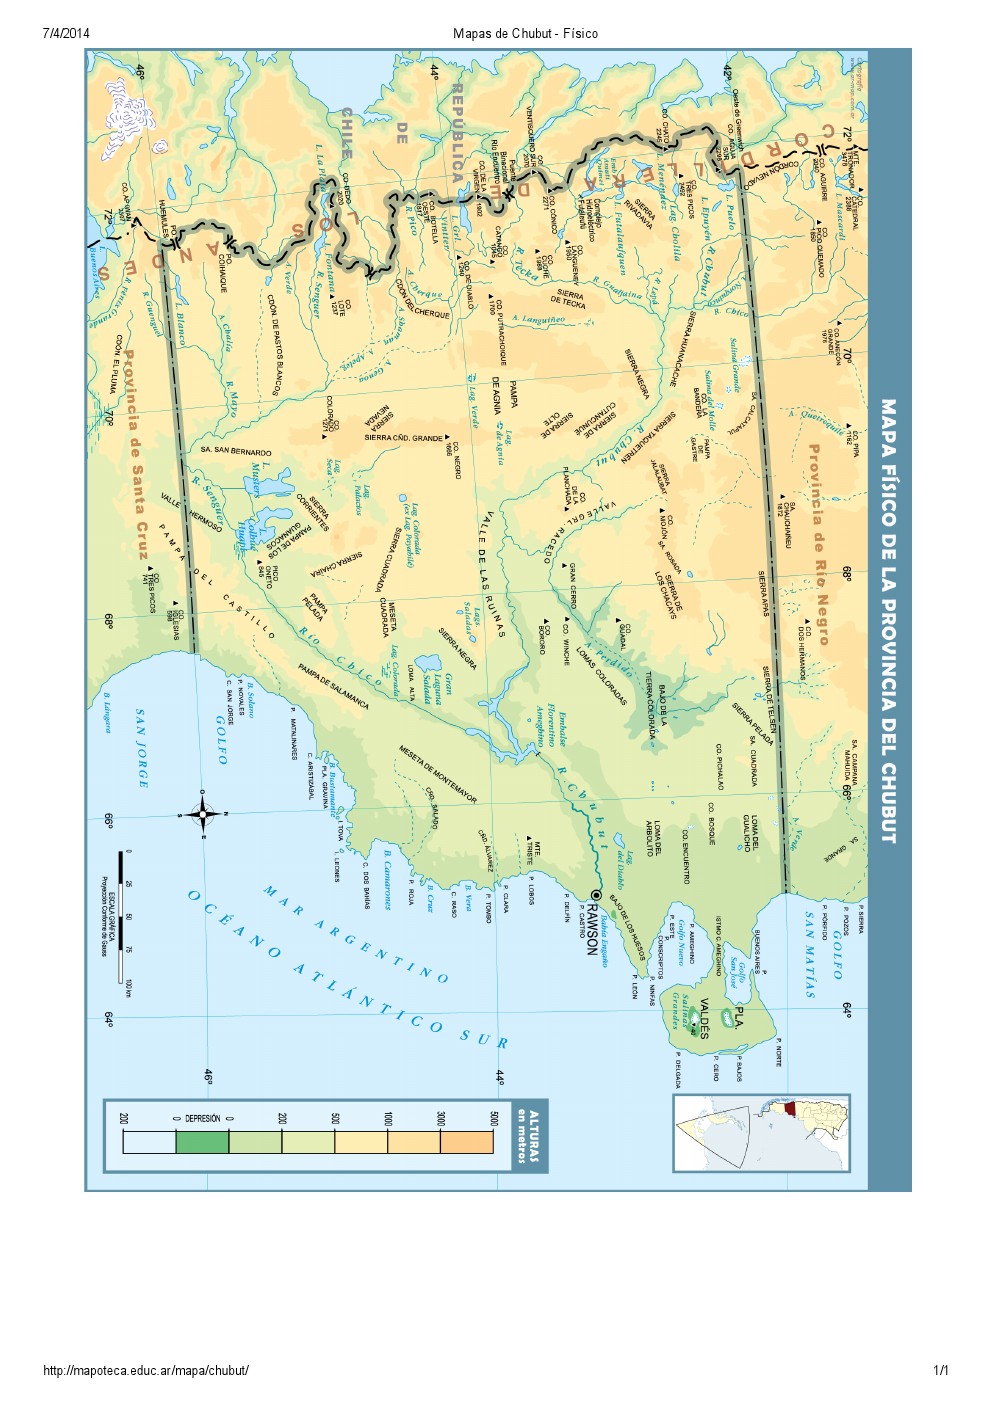 Mapa de ríos del Chubut. Mapoteca de Educ.ar